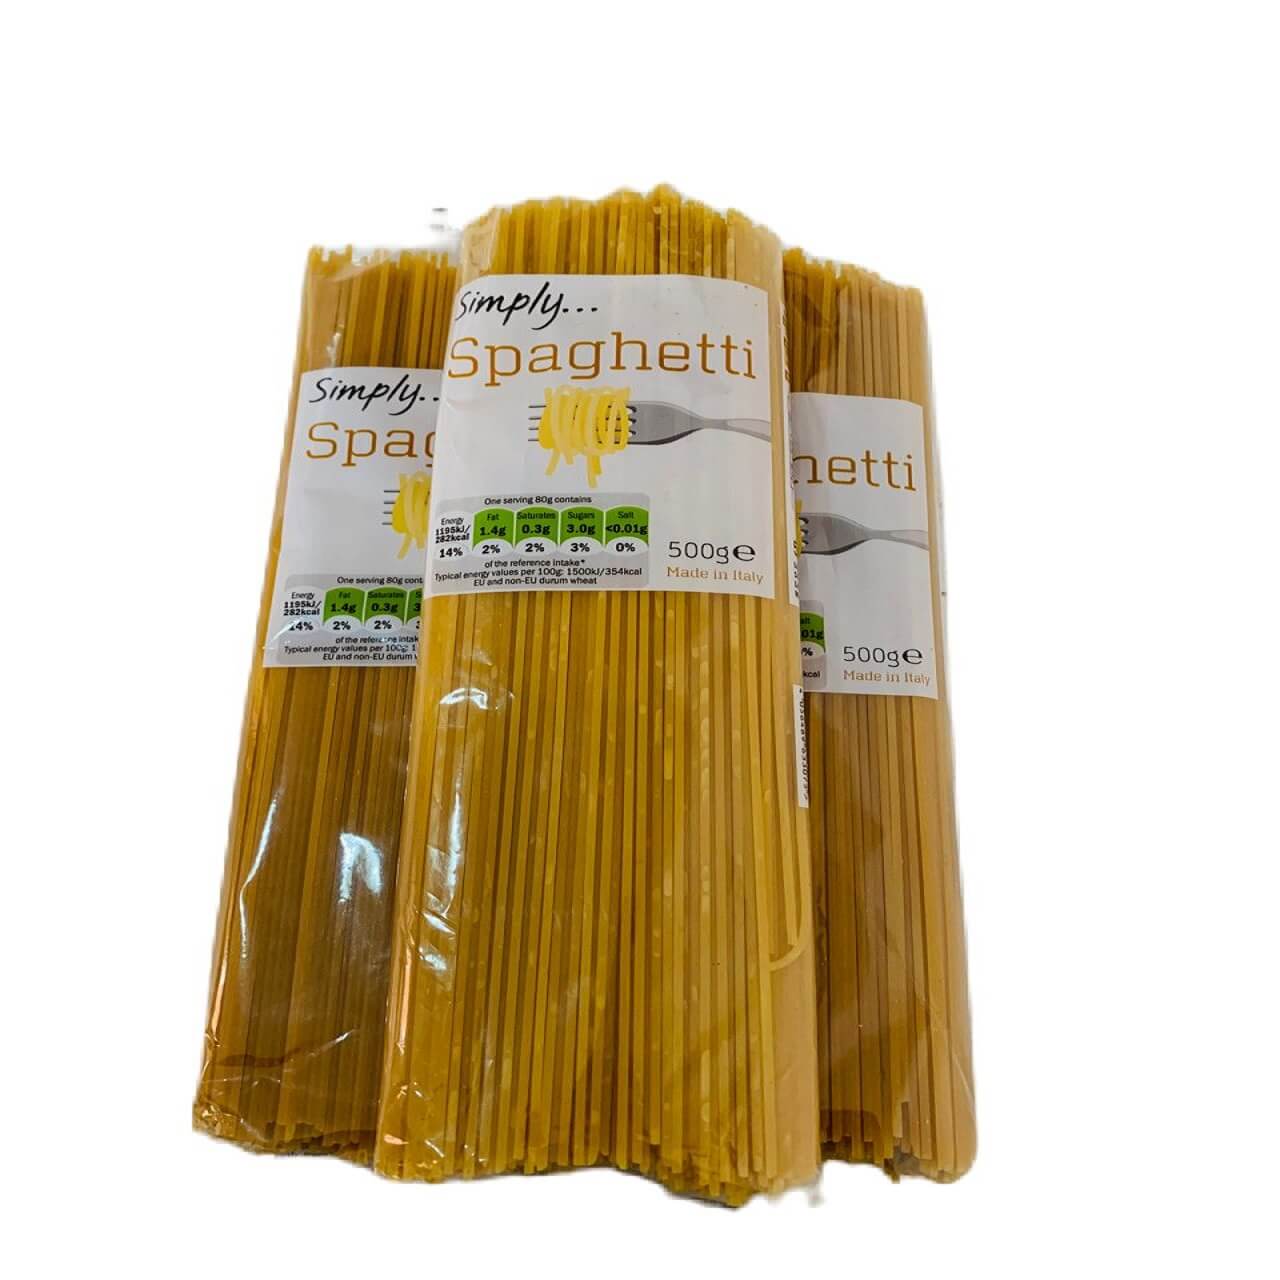 Simply Spaghetti